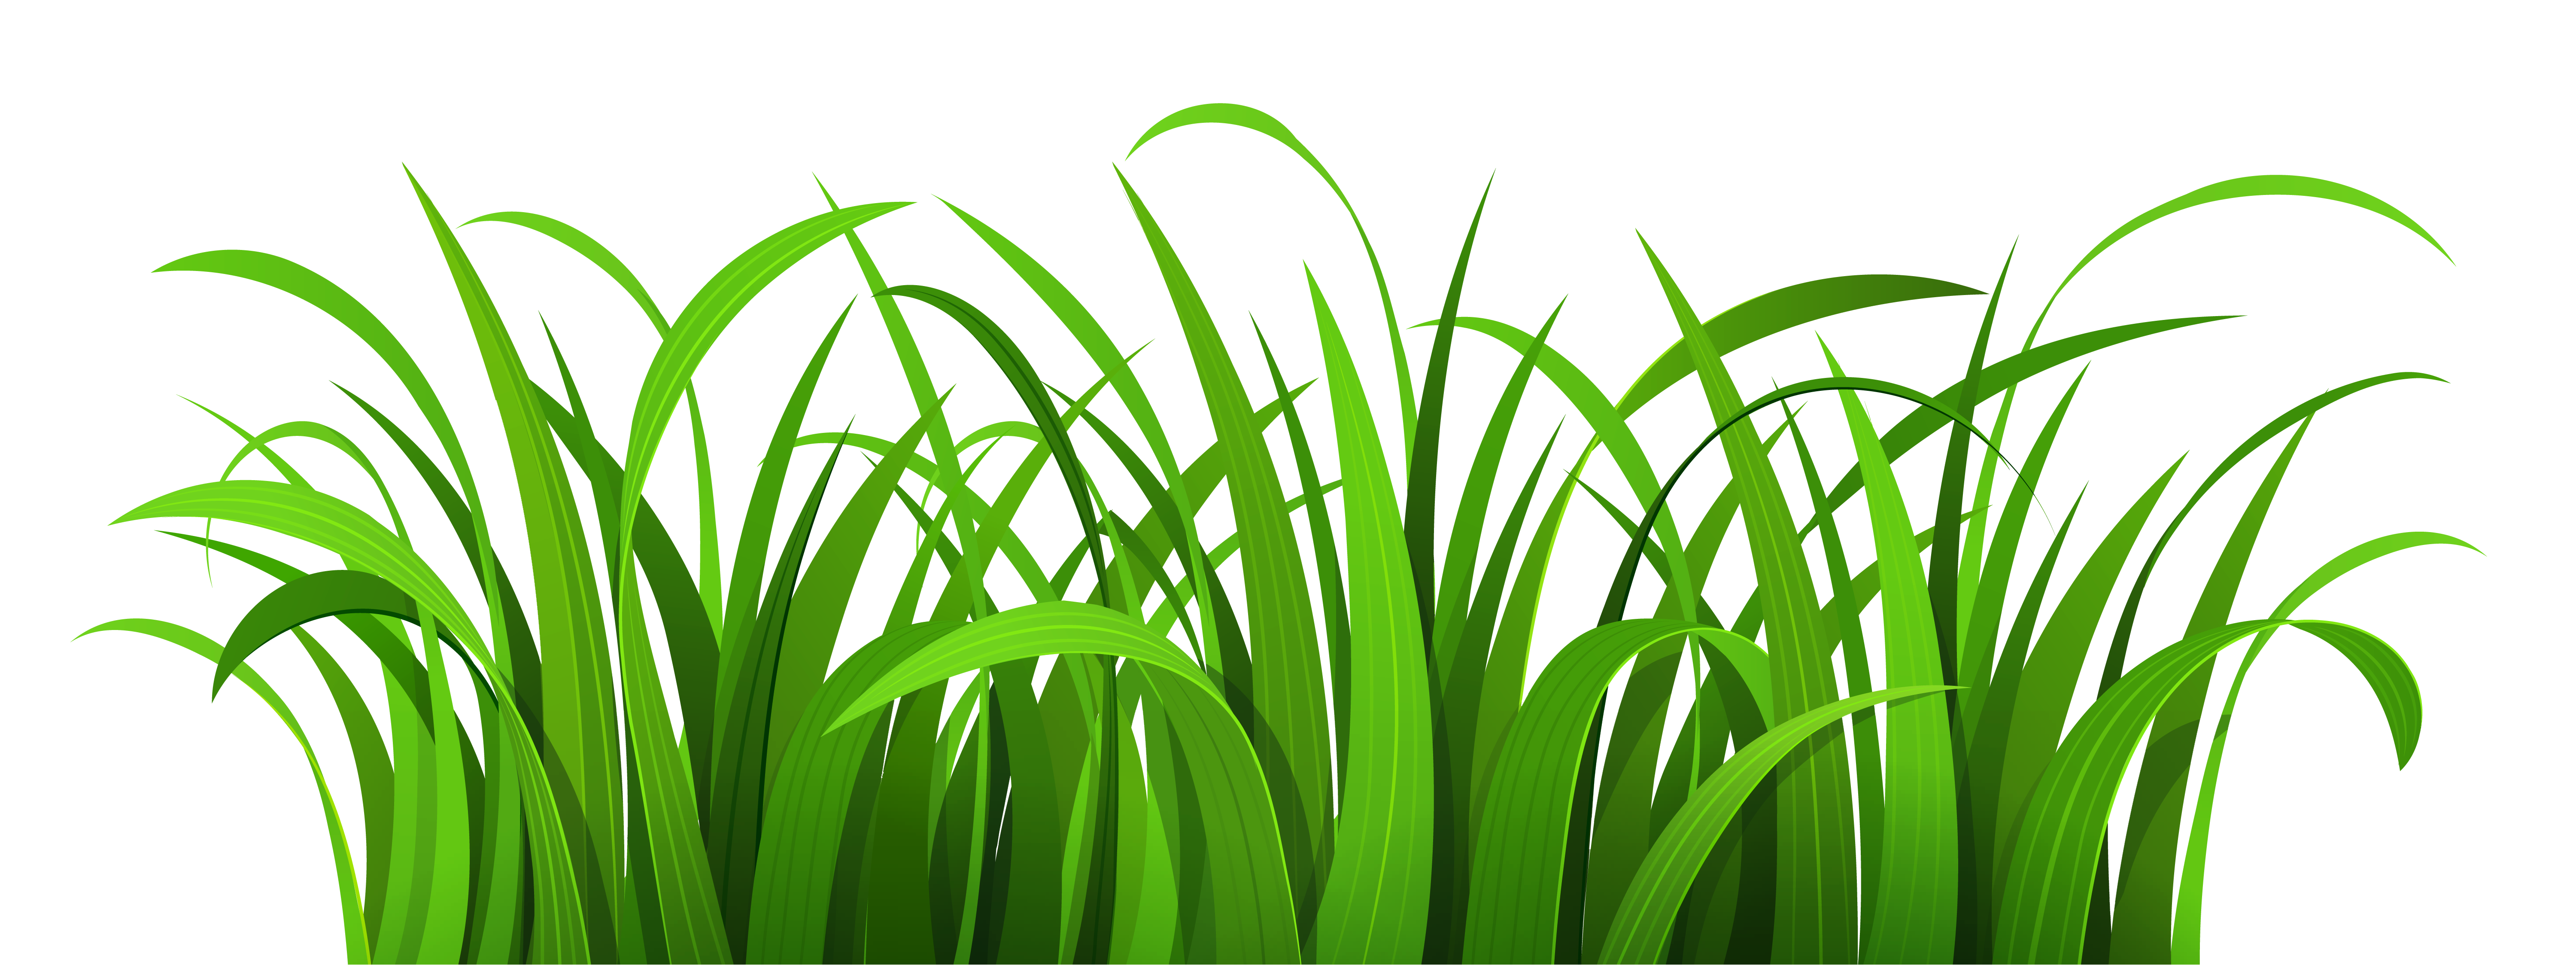 free clipart green grass - photo #13